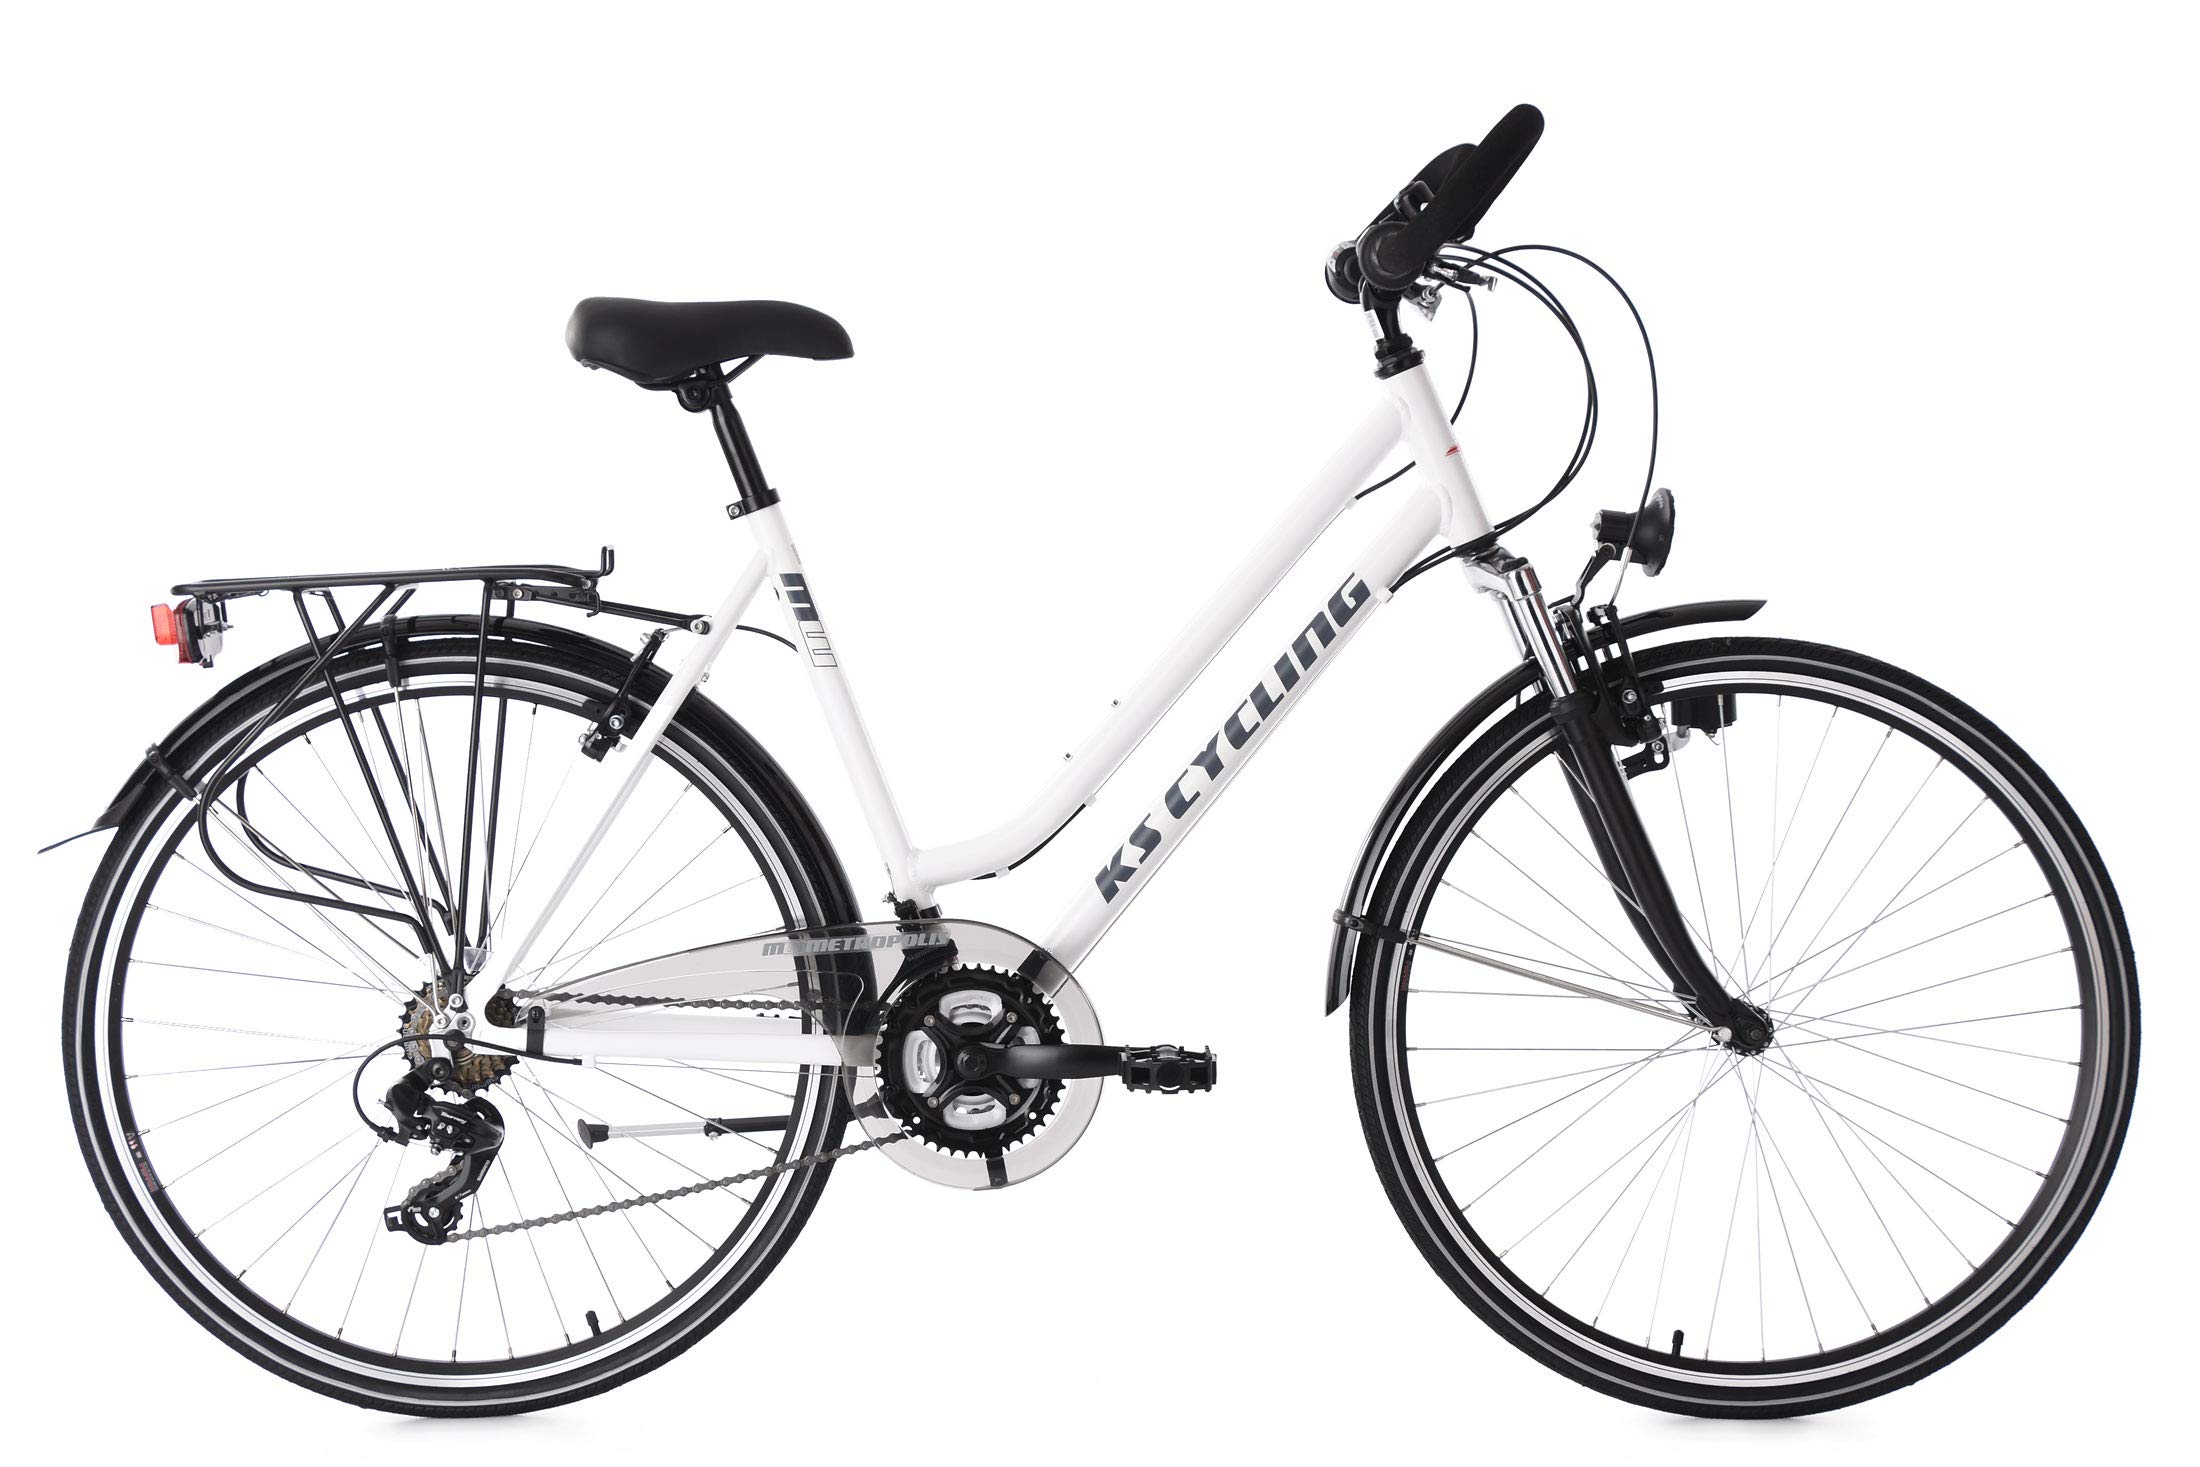 KS Cycling Damen Trekkingrad Alu-Rahmen 28'' Metropolis RH 48 cm Multipositionslenker Fahrrad, weiß, 28